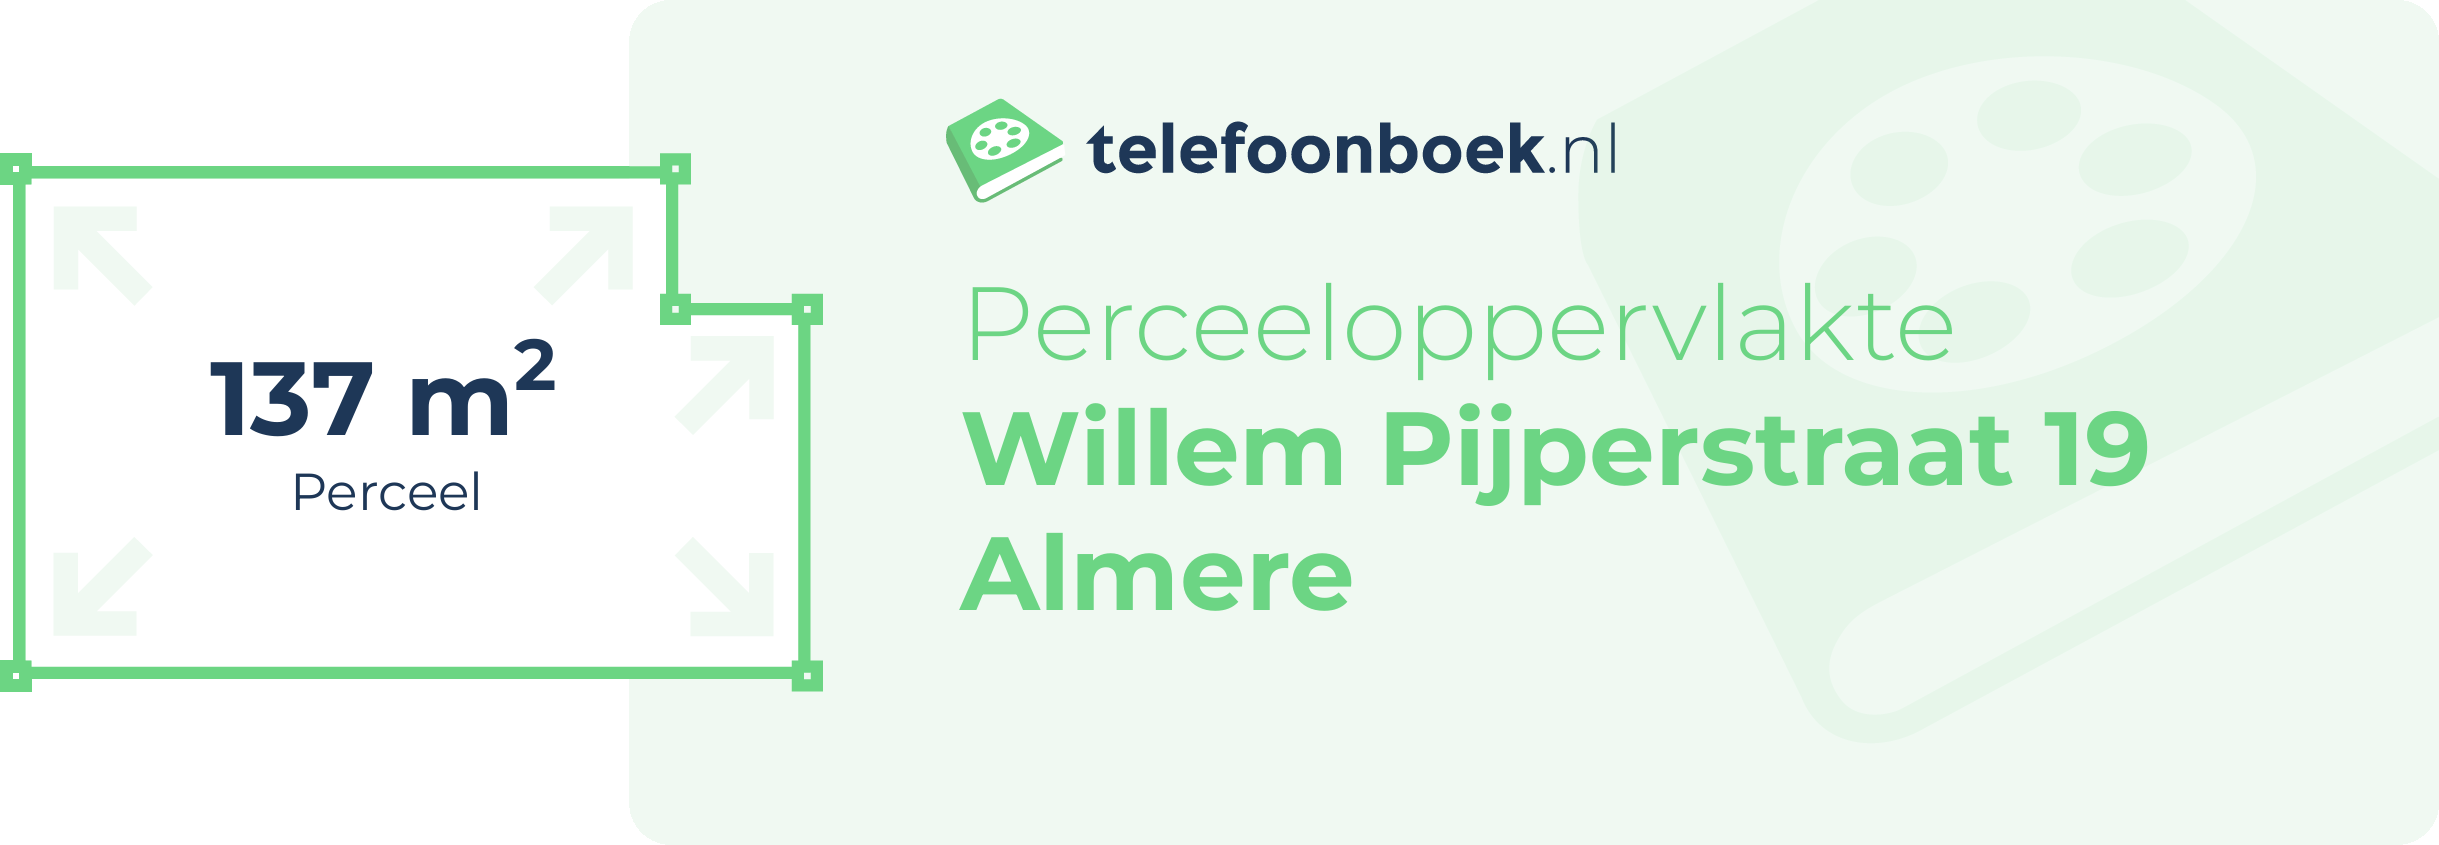 Perceeloppervlakte Willem Pijperstraat 19 Almere